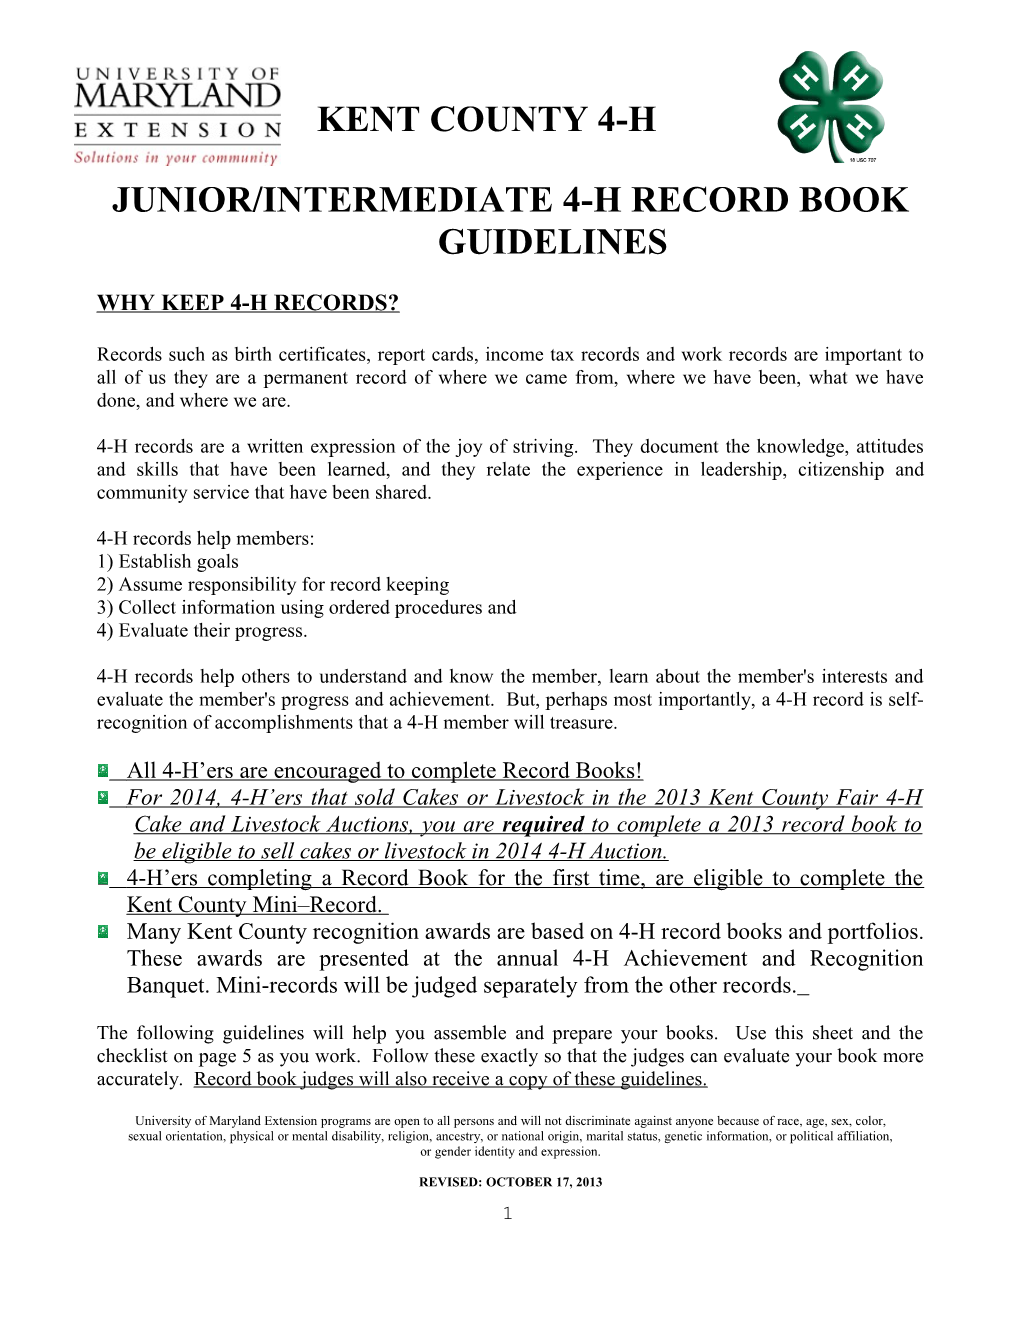 Junior/Intermediate 4-H Record Book Guidelines